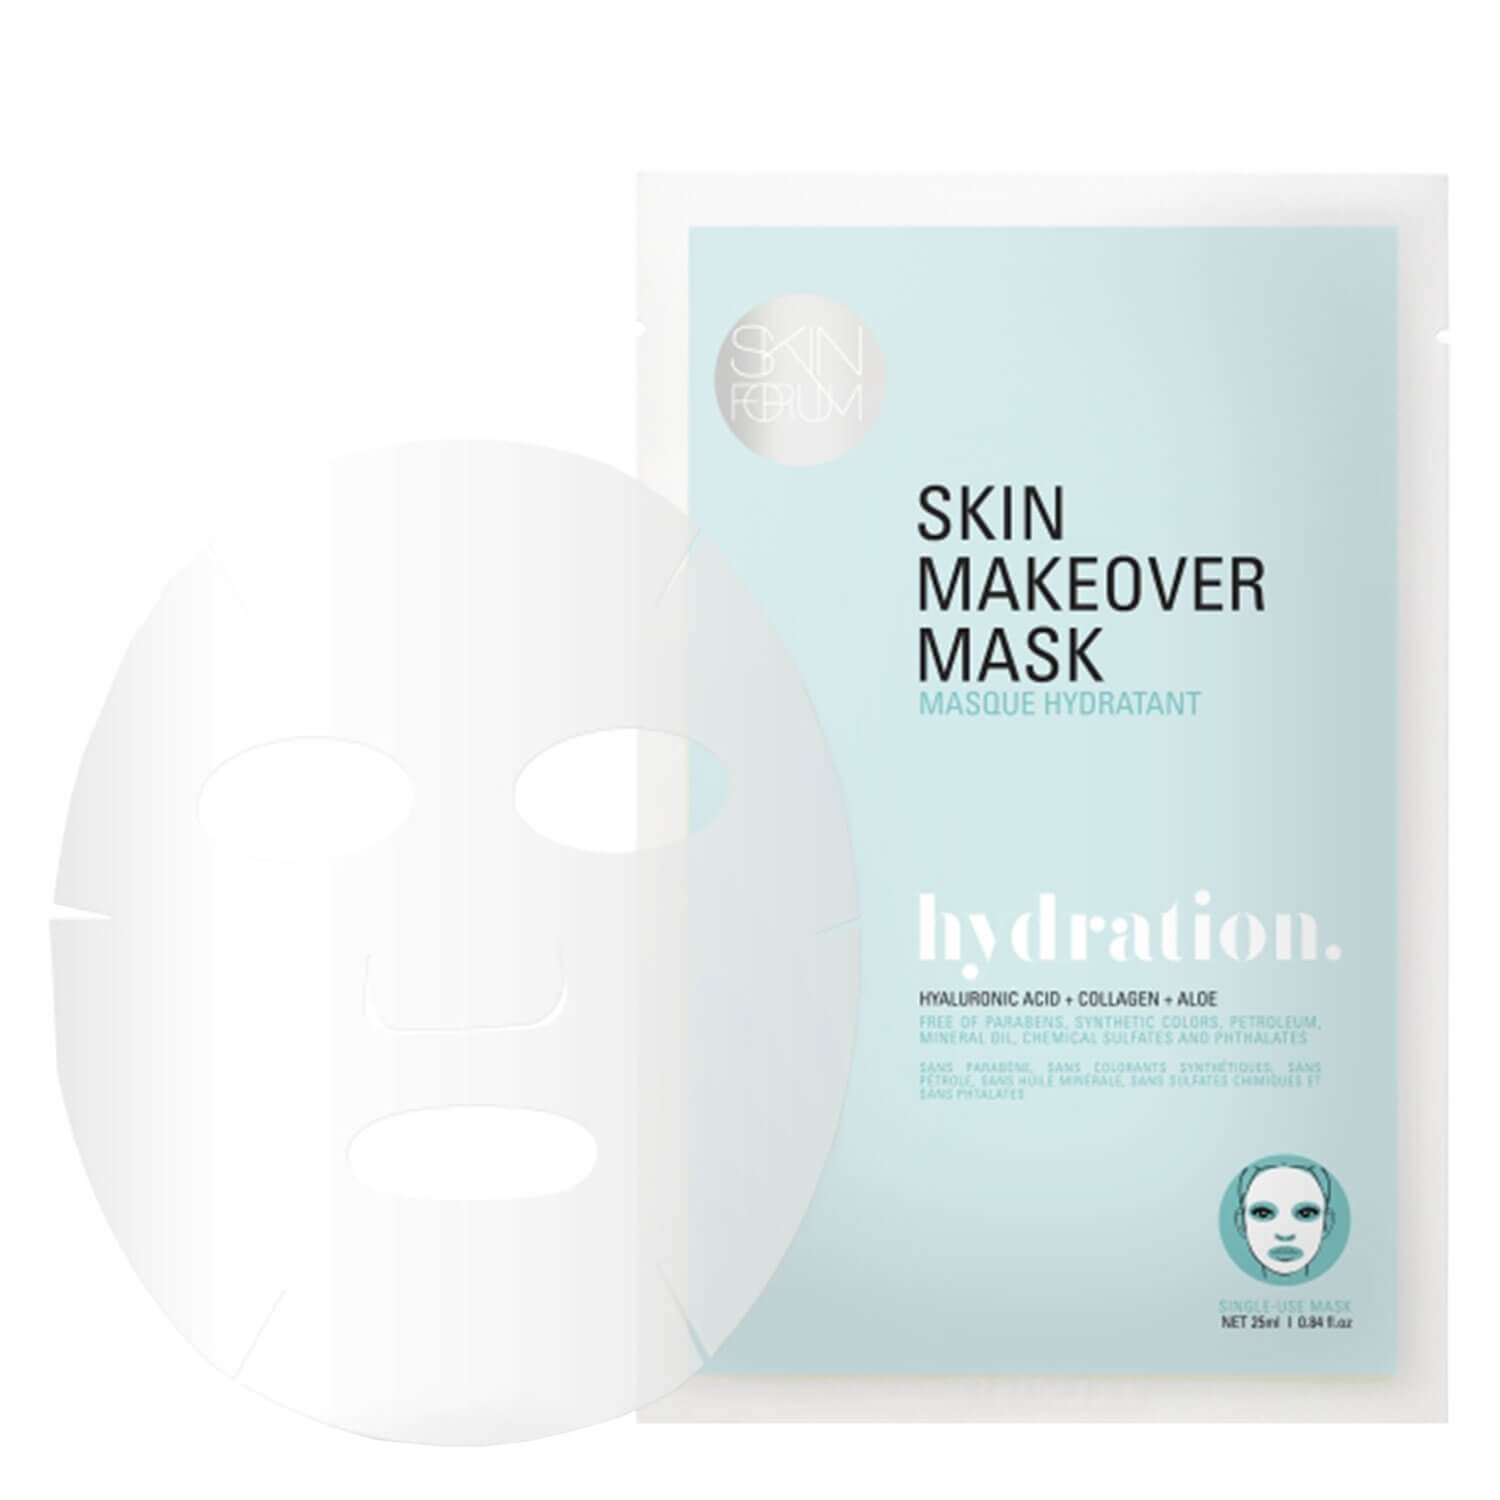 Image du produit de VOESH New York - Skin Makeover Mask hydration